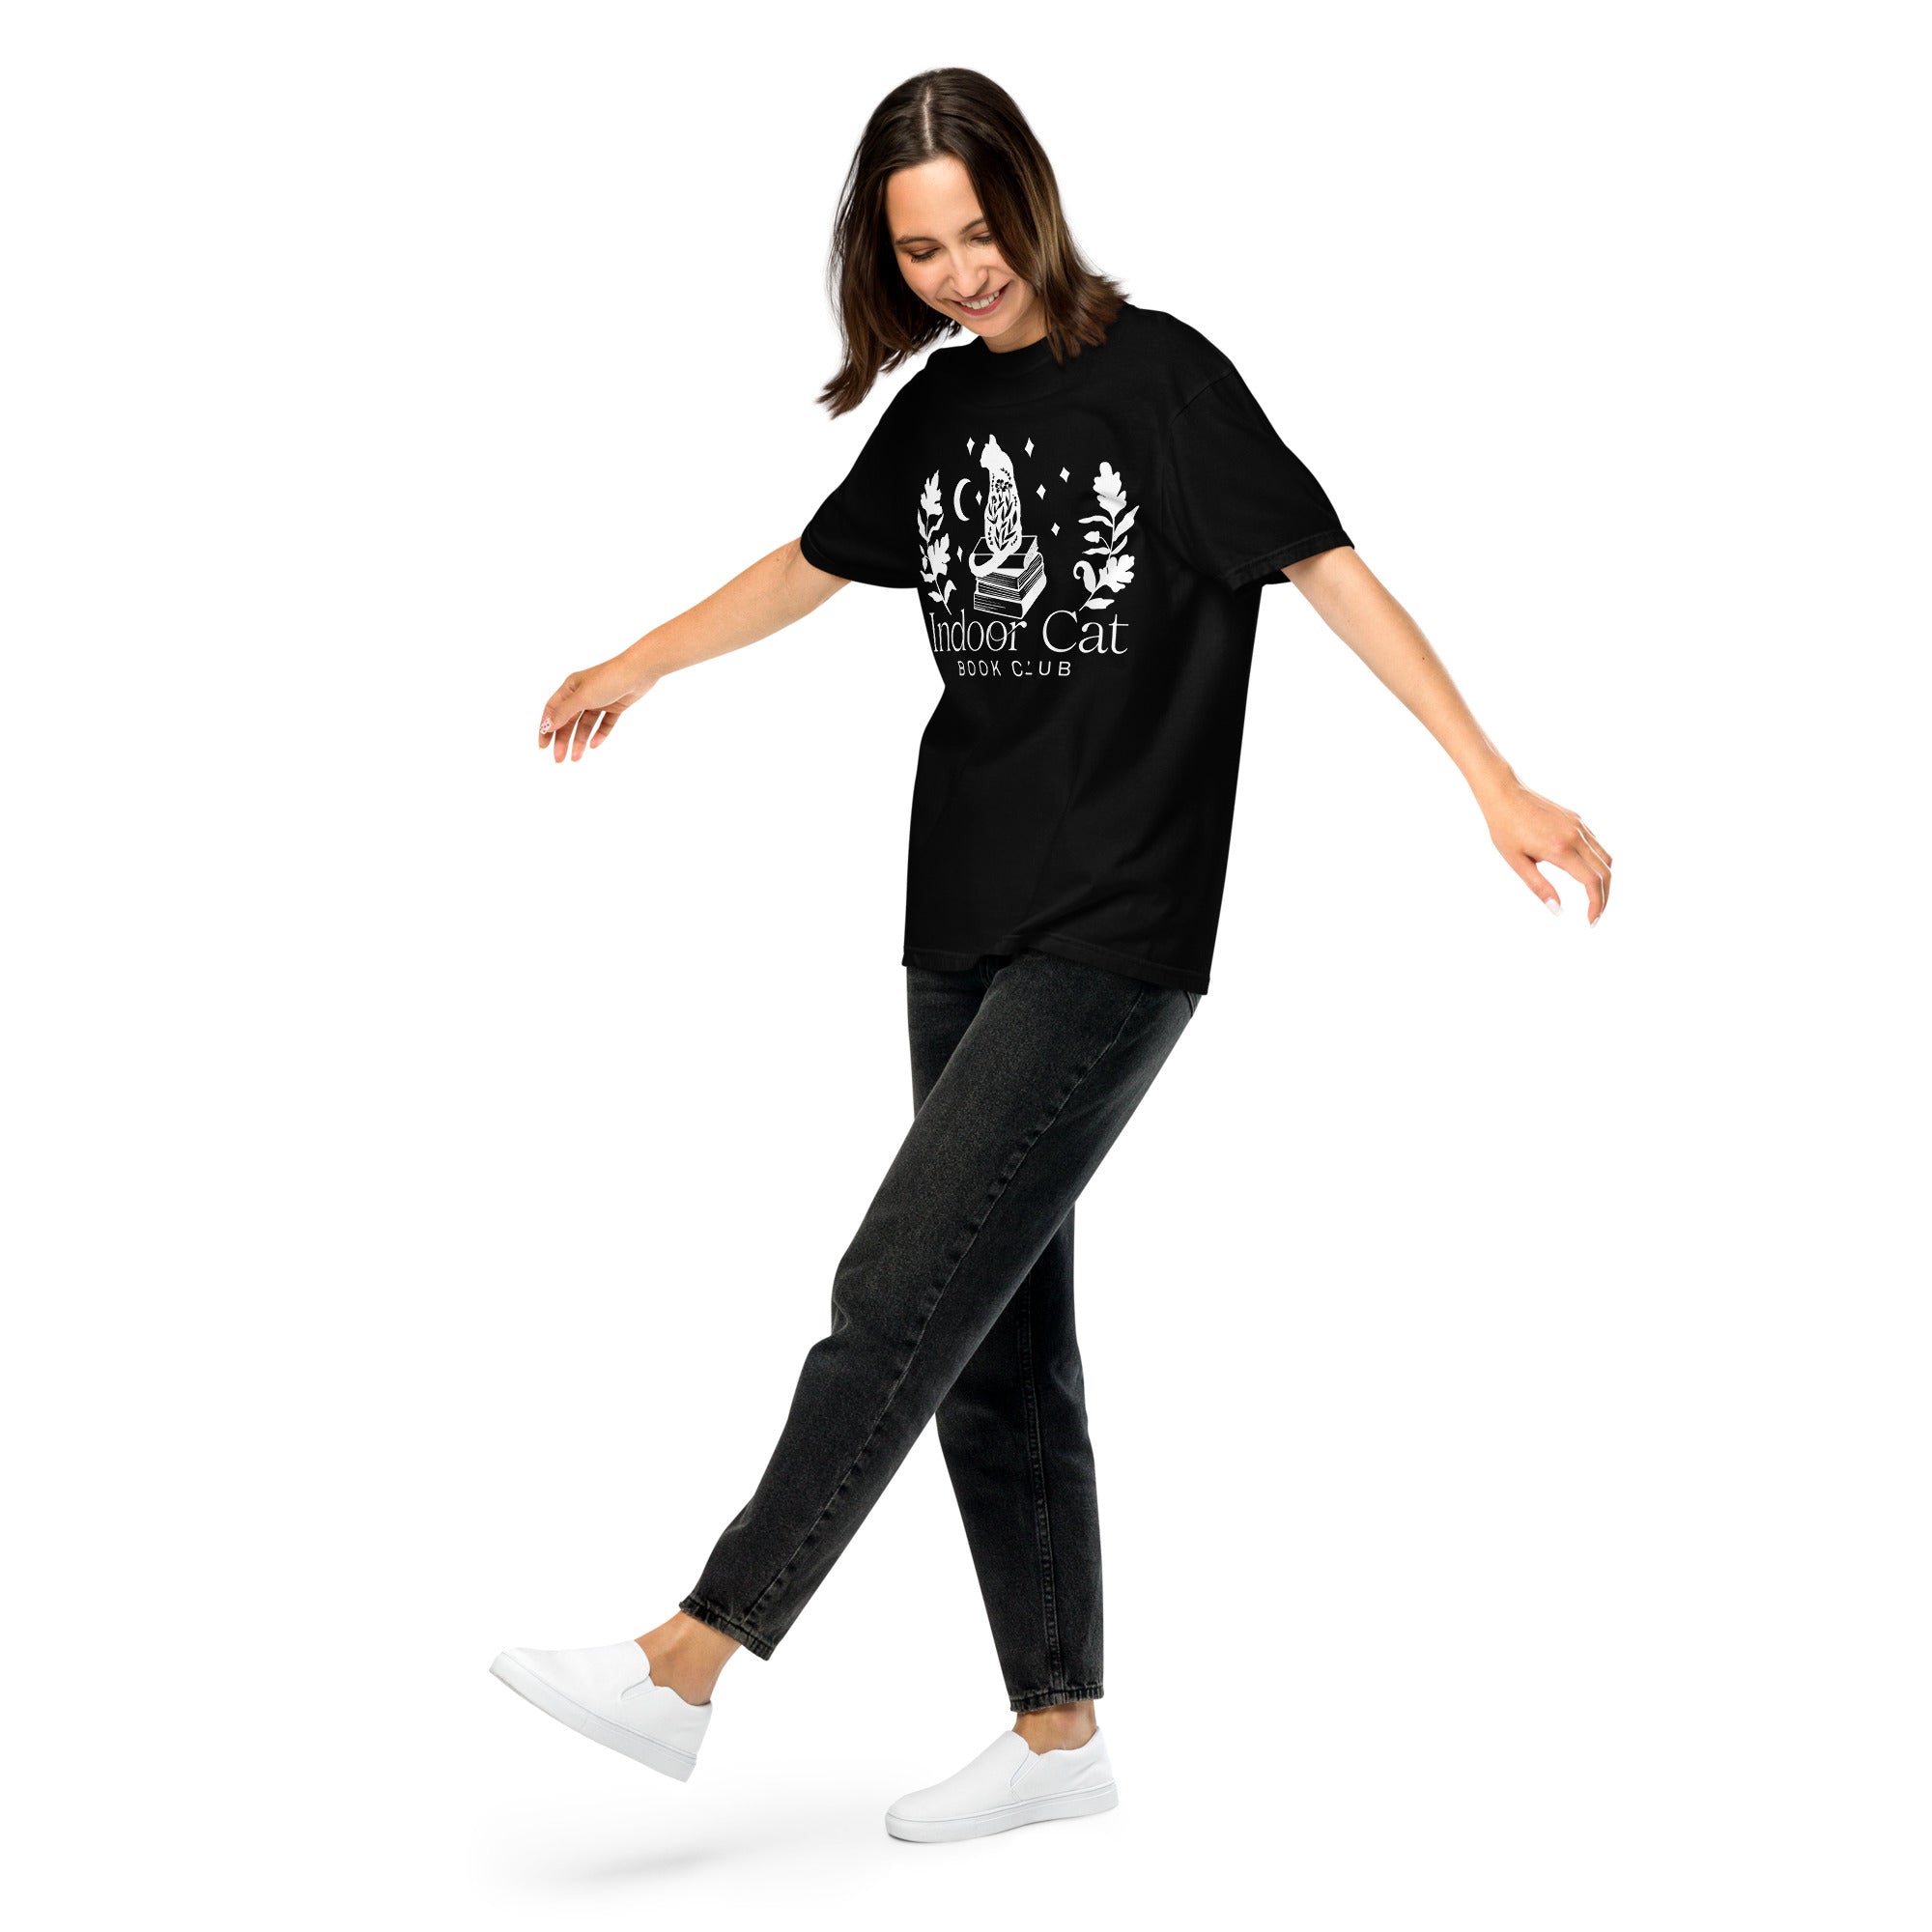 FireDrake Artistry™ Indoor Cat t-shirt, comfort colors brand in black, white design